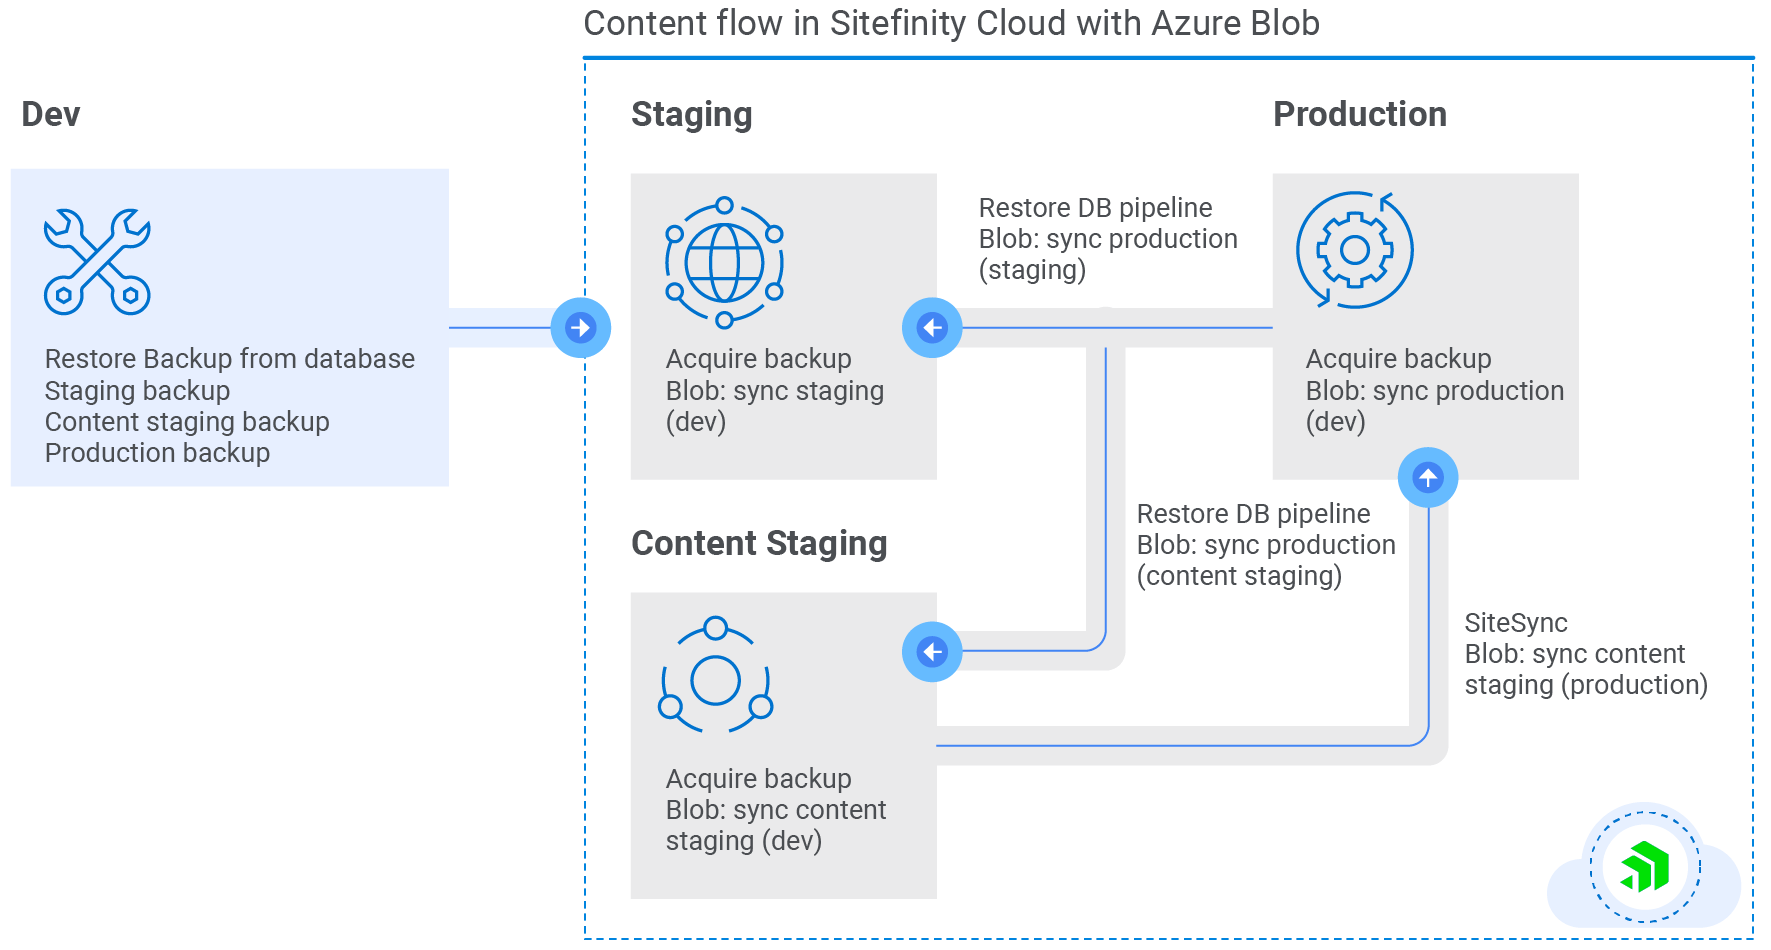 Sitefinity Cloud Blob Storage Diagram